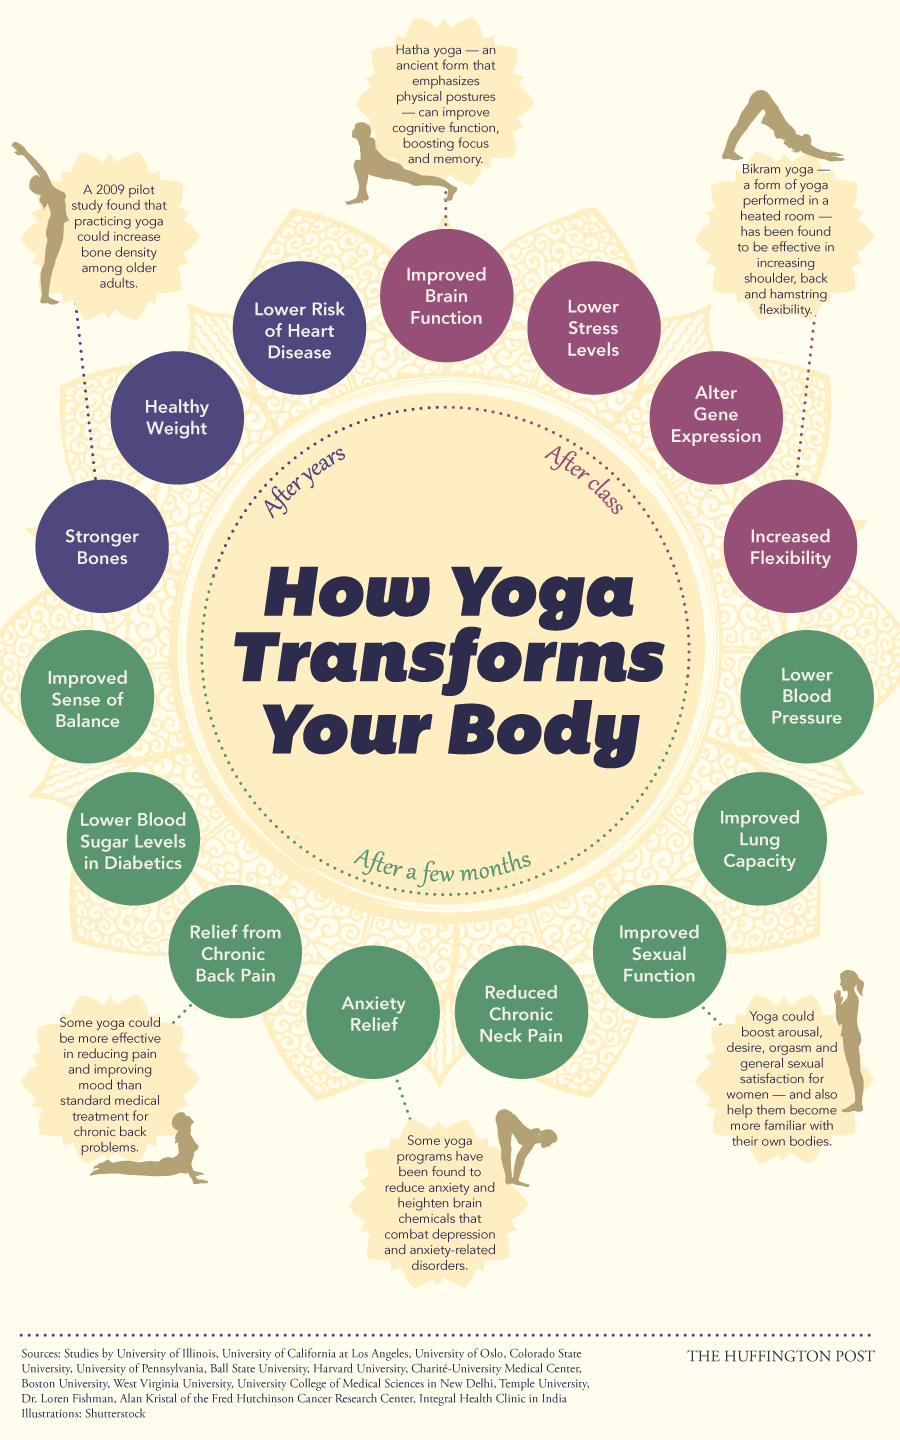 The Body on Yoga